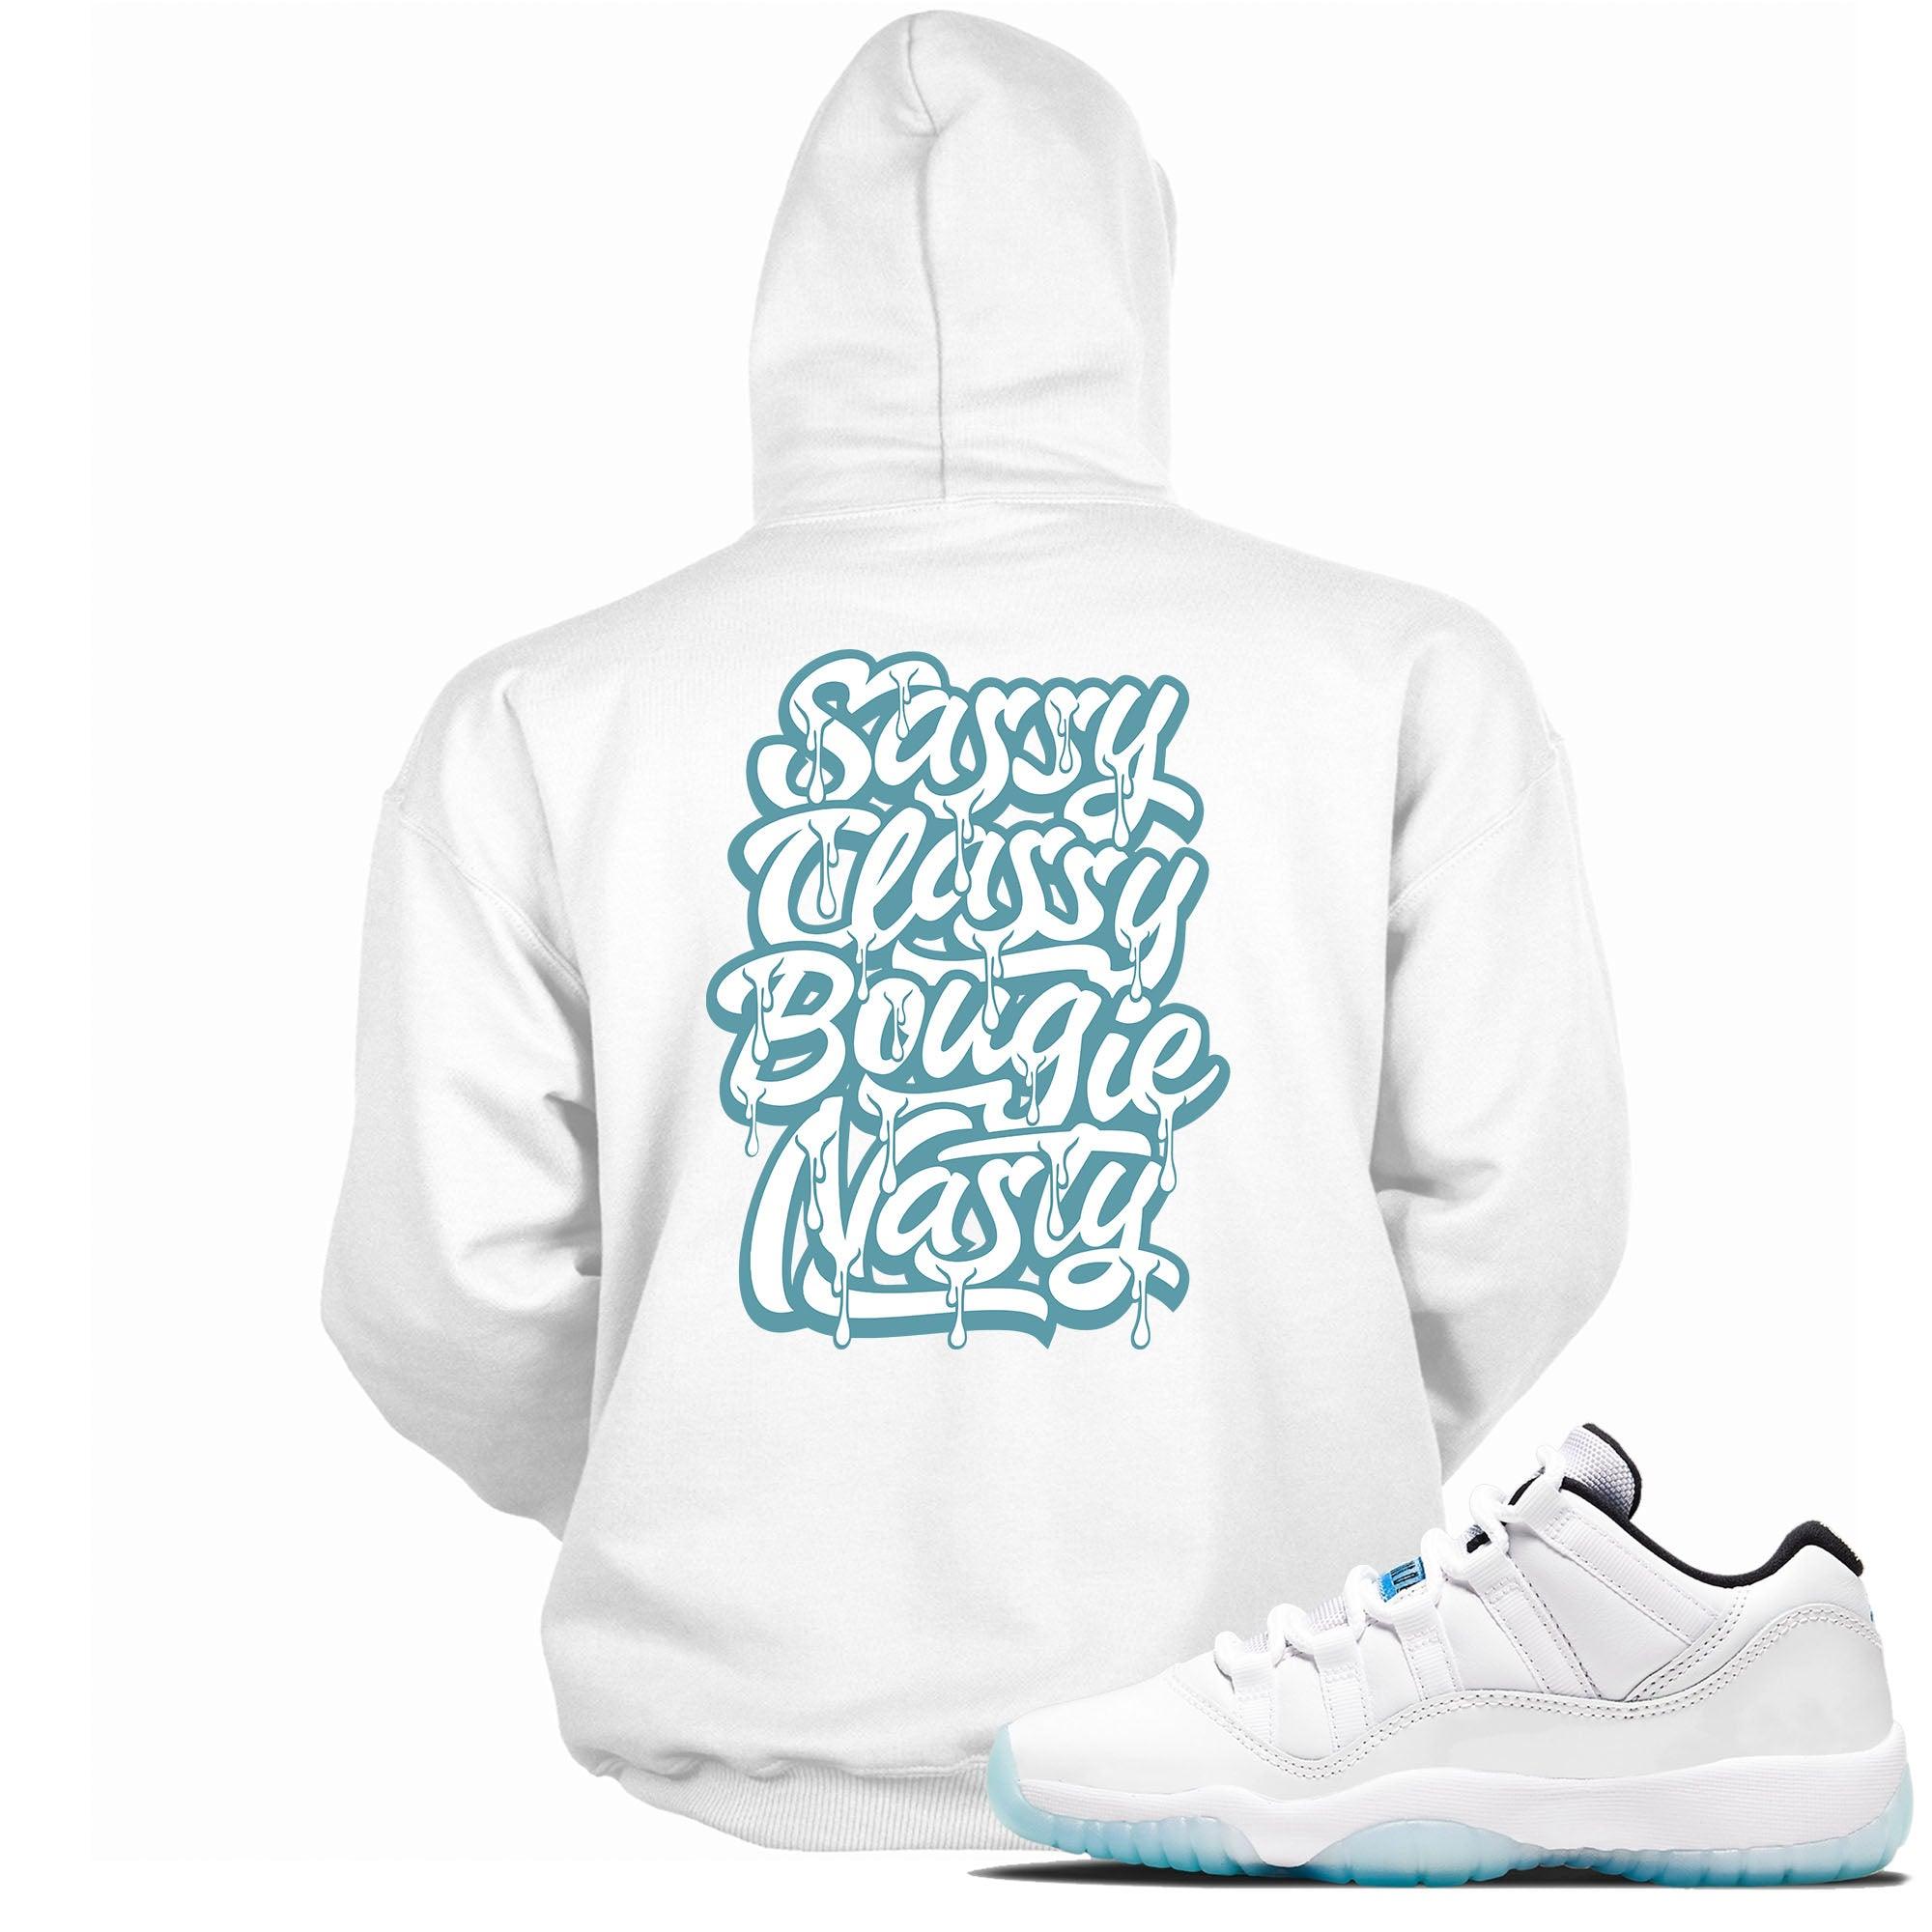 Sassy Classy Hooded Sneaker Sweatshirt AJ 11 Retro Low Legend Blue photo